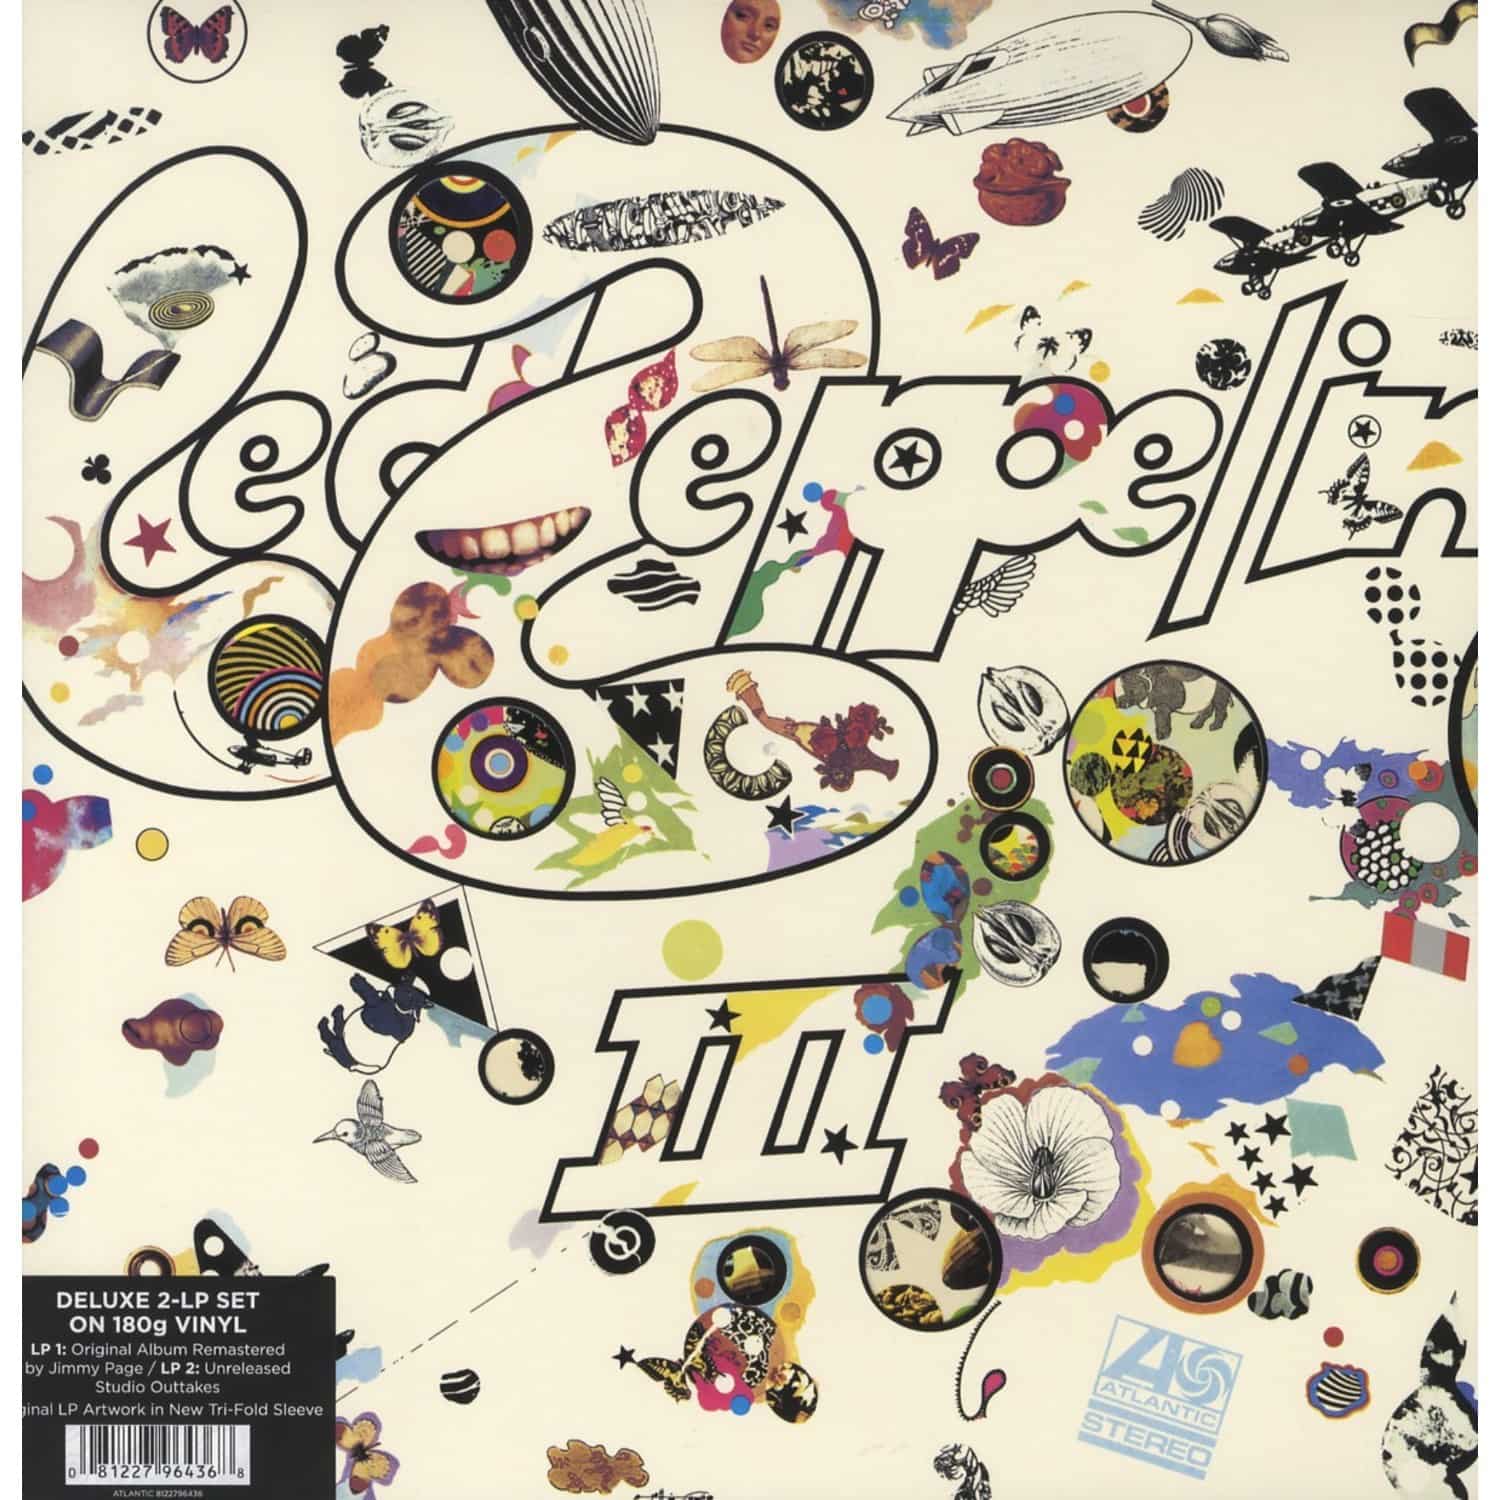 Led Zeppelin - LED ZEPPELIN III 